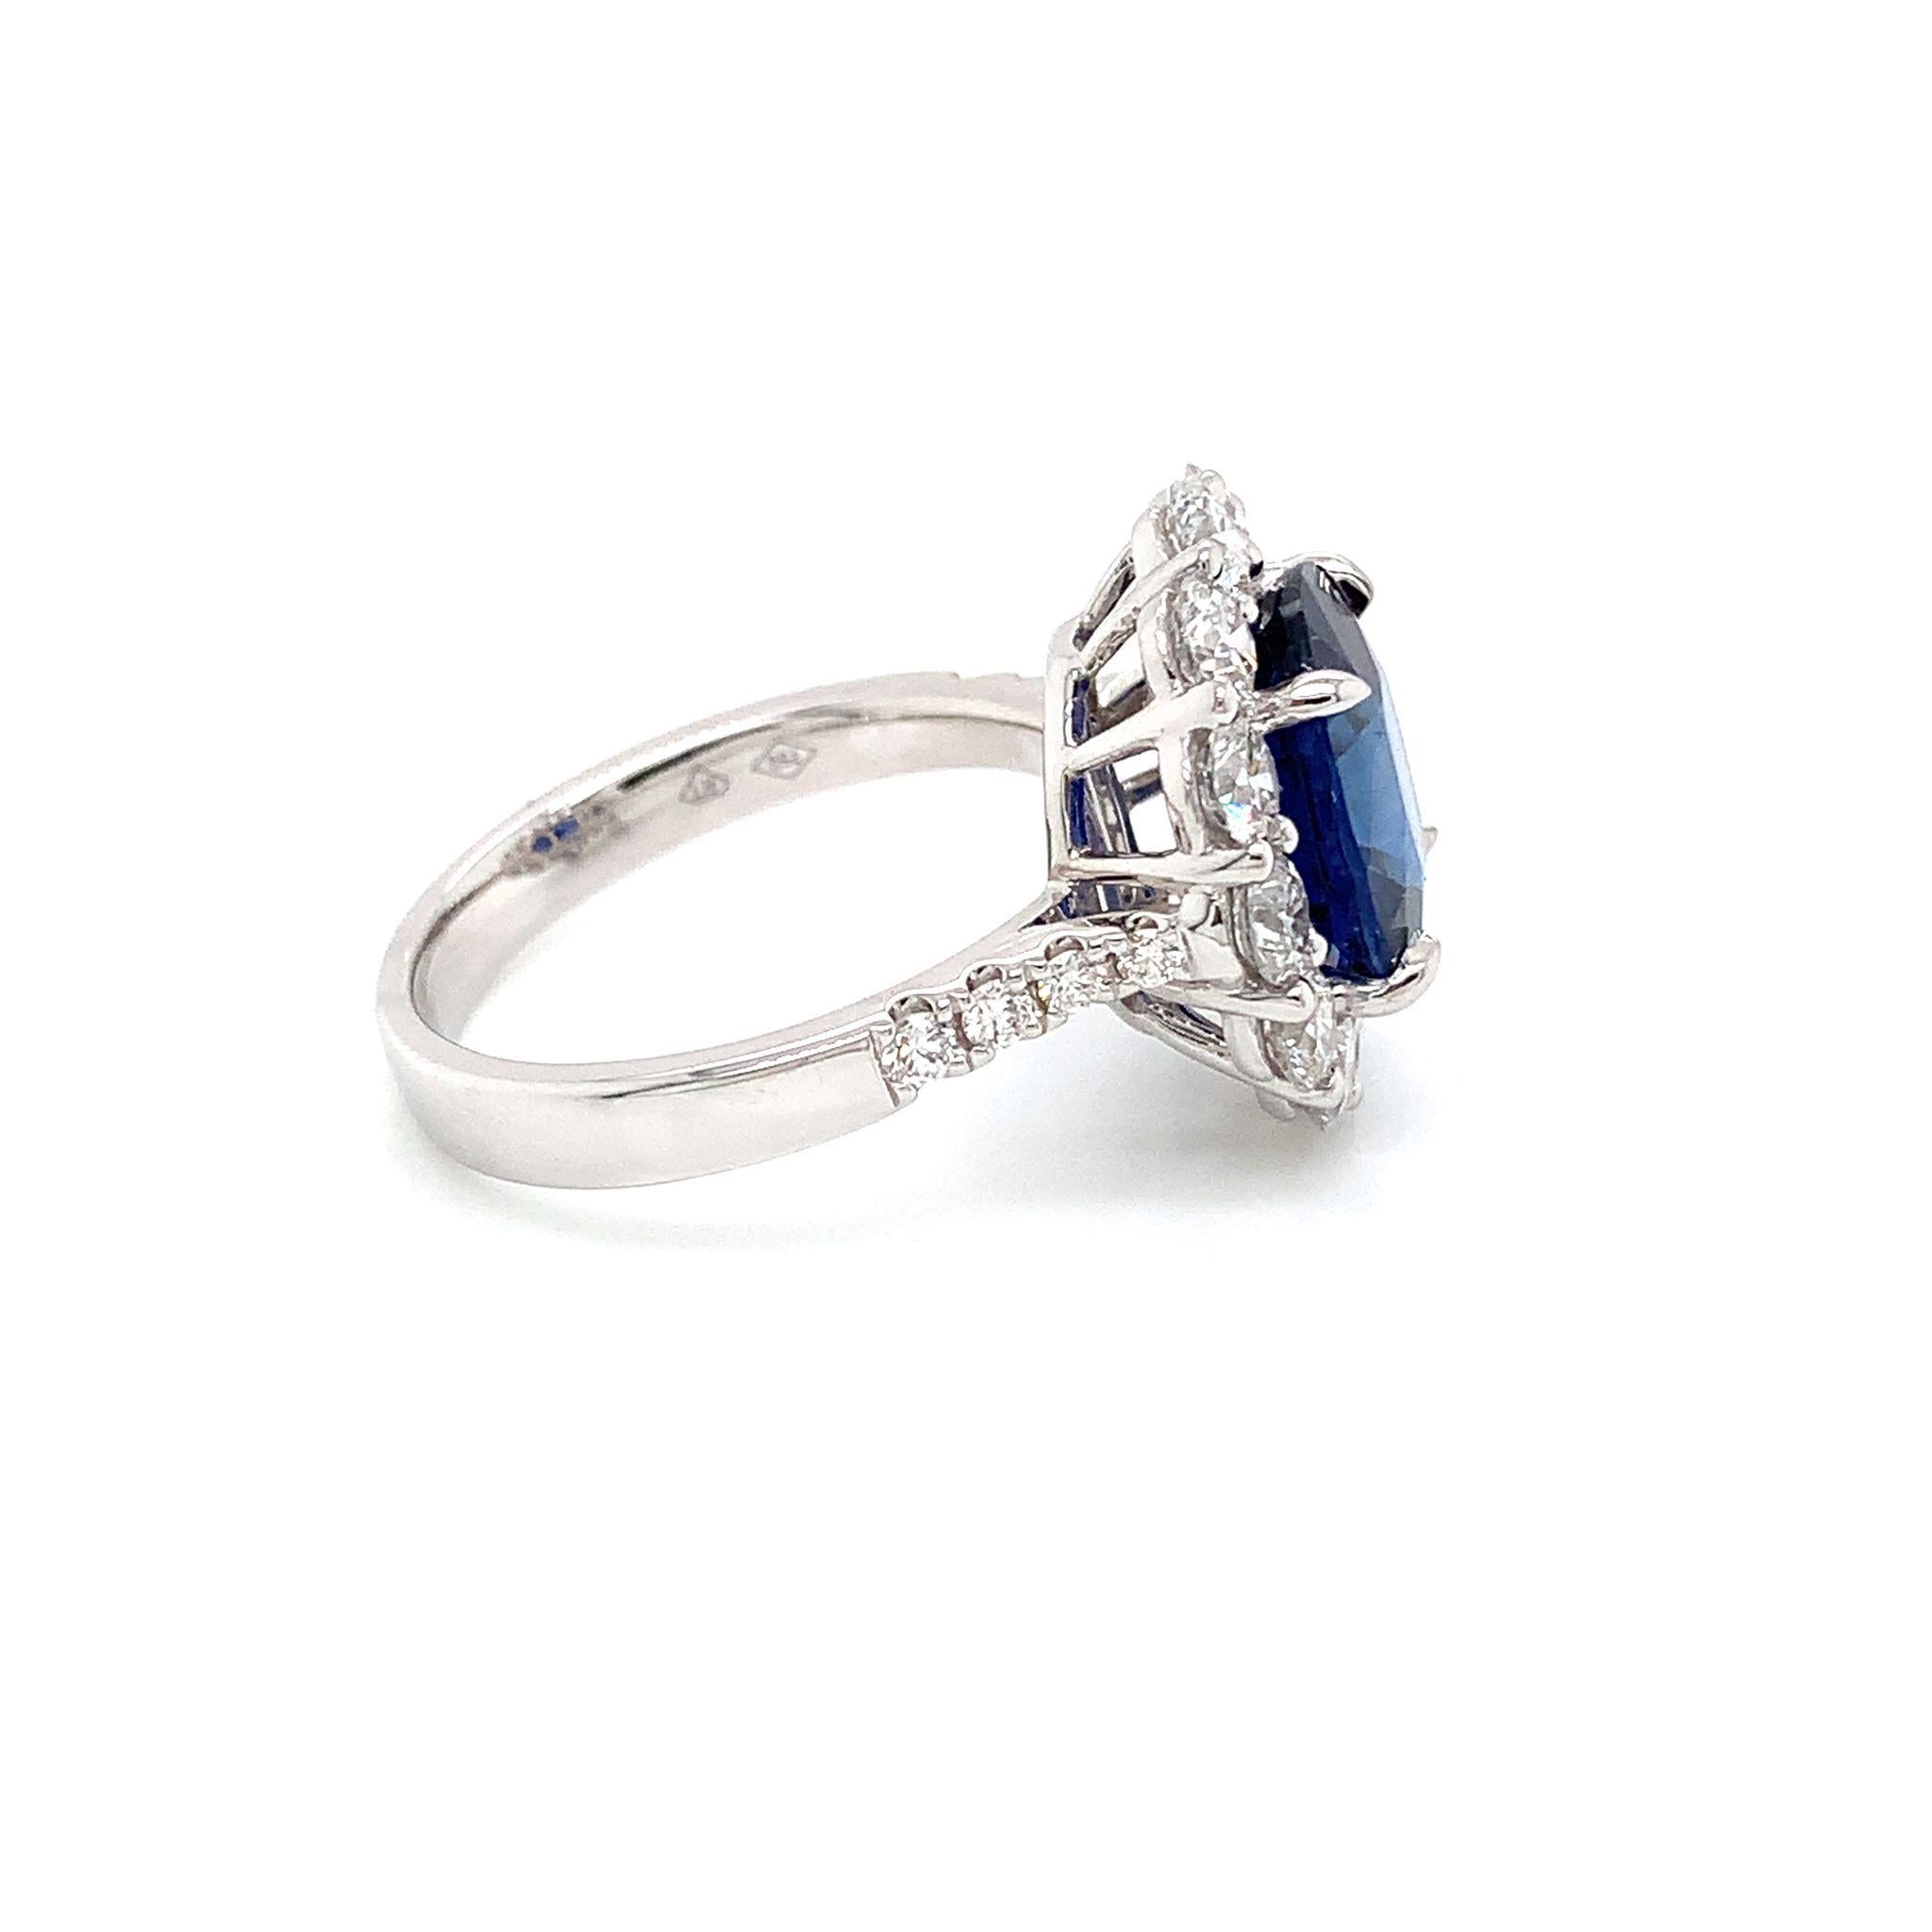 Oval Cut GIA Cert. 4.12 Carat Oval Blue Sapphire & Diamond Ring in 18 Karat White Gold